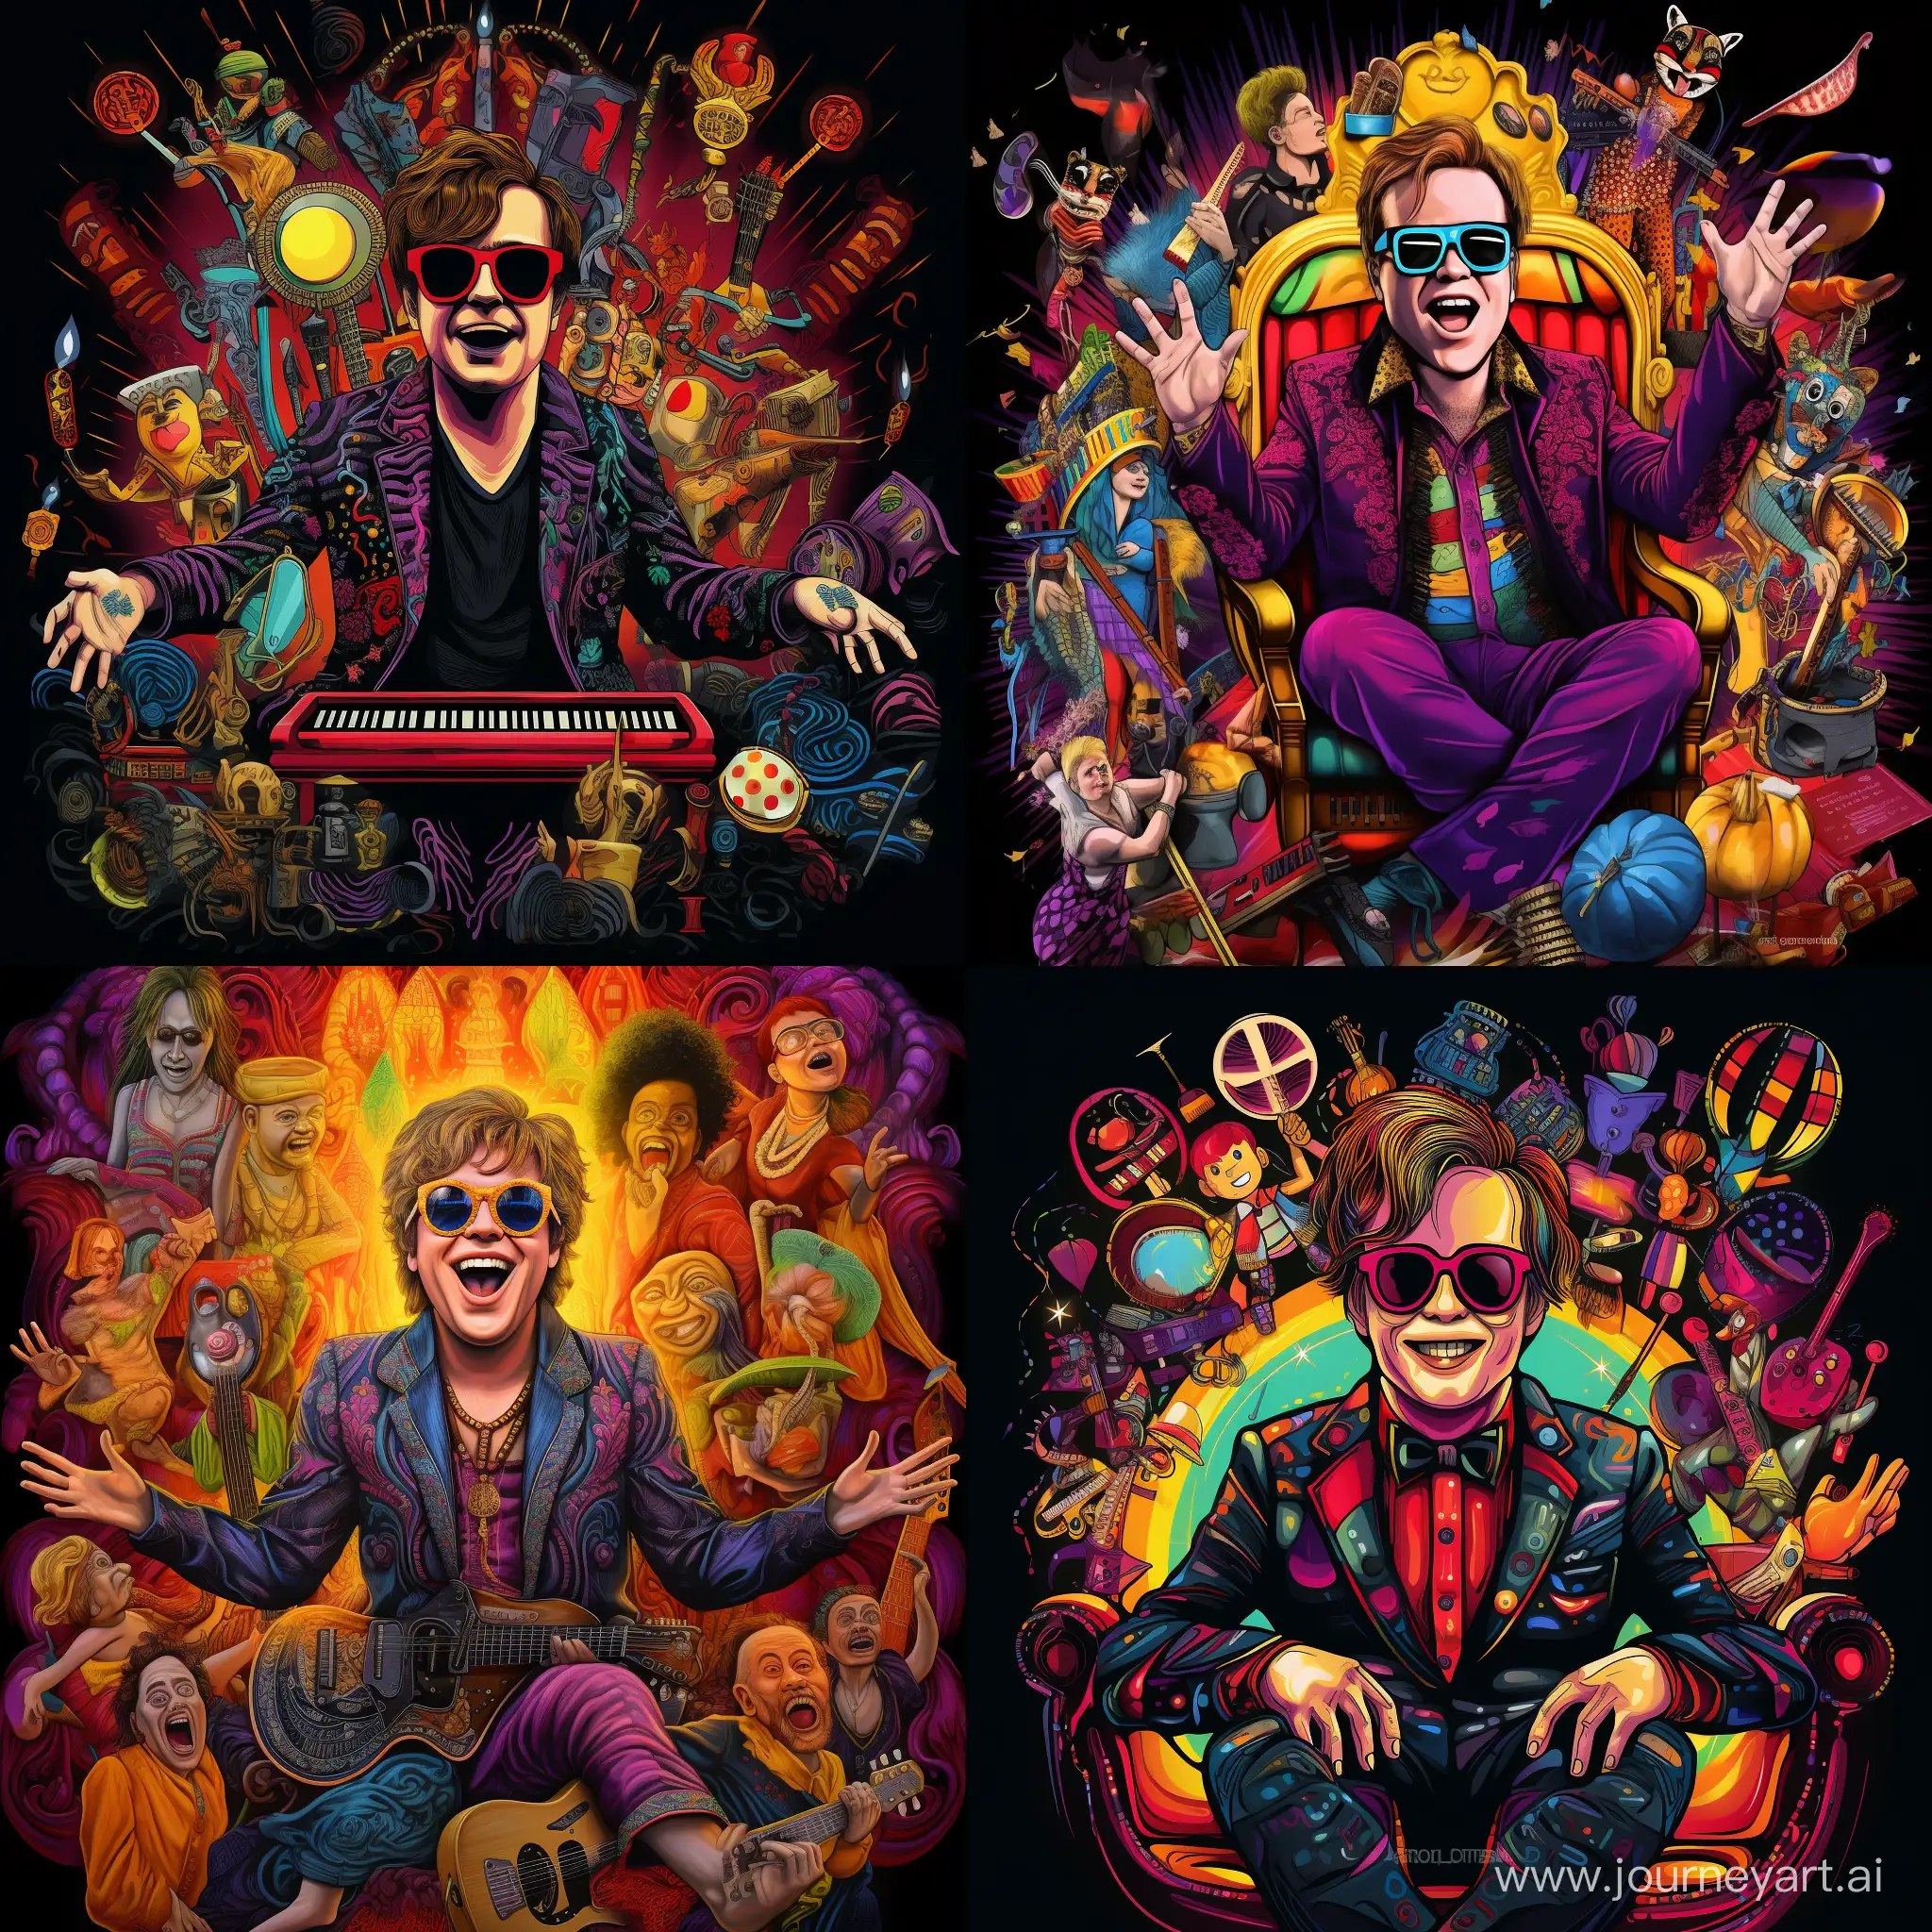 Elton-John-Performing-Vibrant-Pop-Art-Musical-Portrait